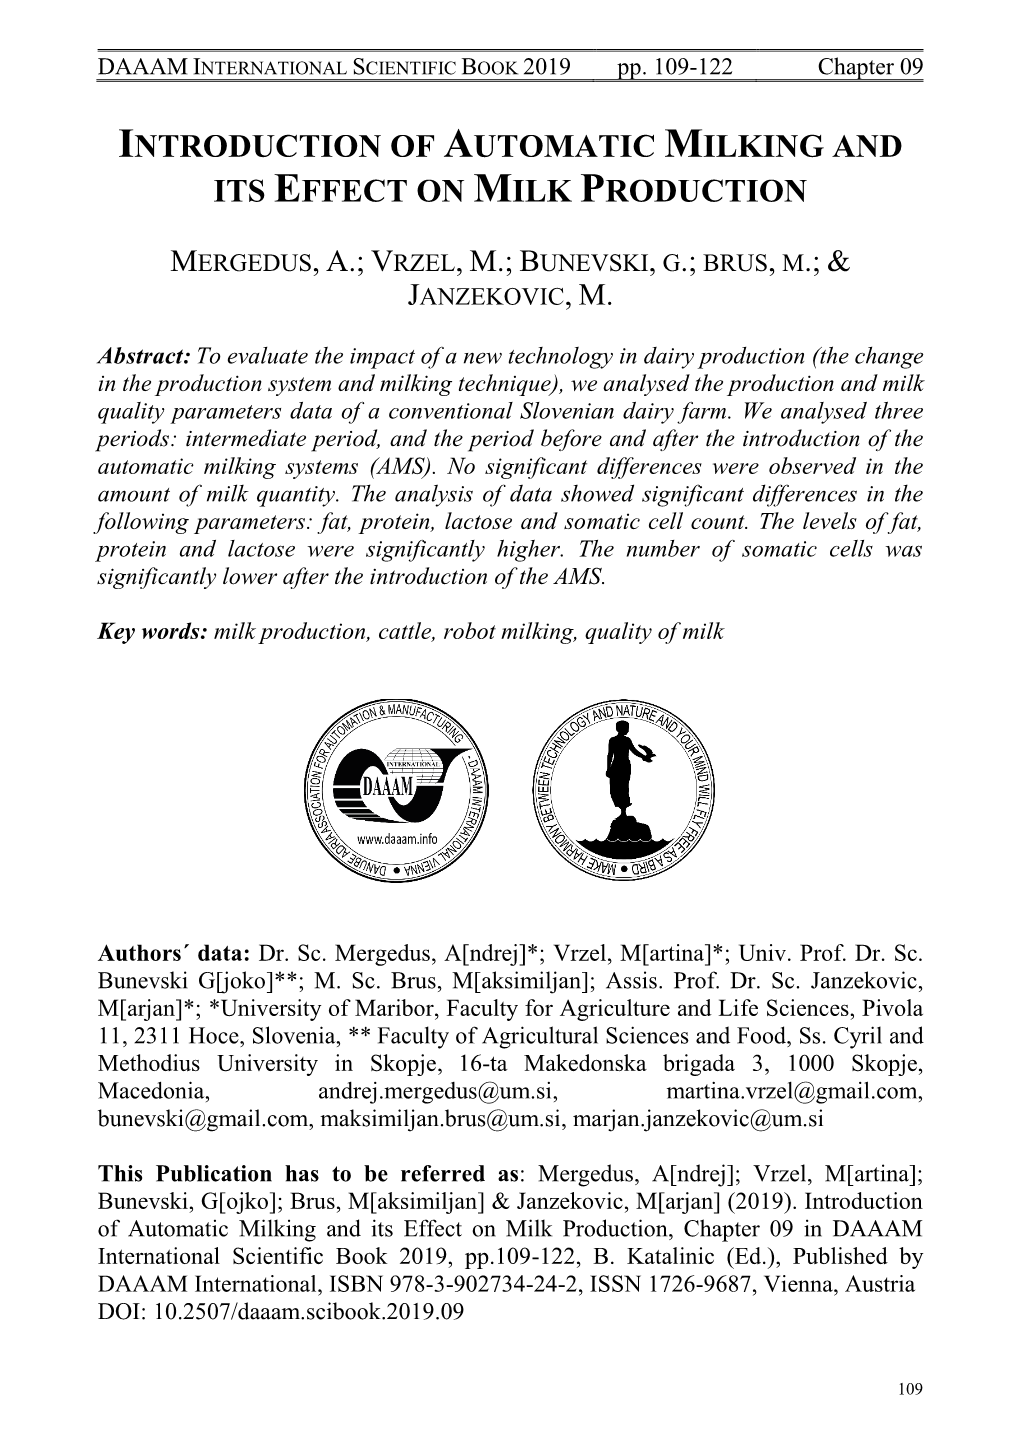 Brus, M. & Janzekovic, M.: Introduction of Automatic Milking